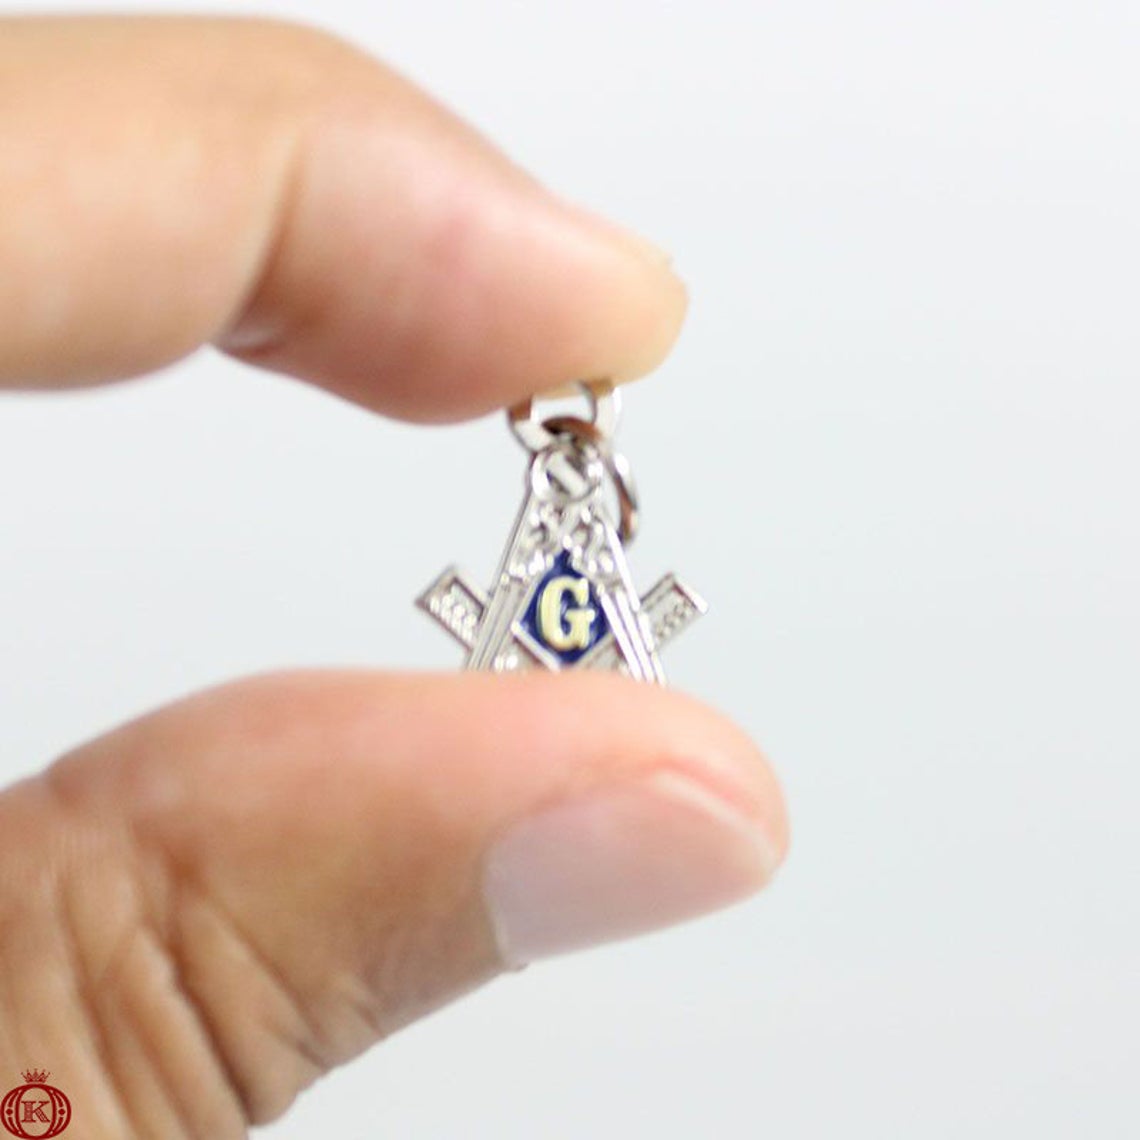 freemasonry prince hall masonic jewelry bracelet charm